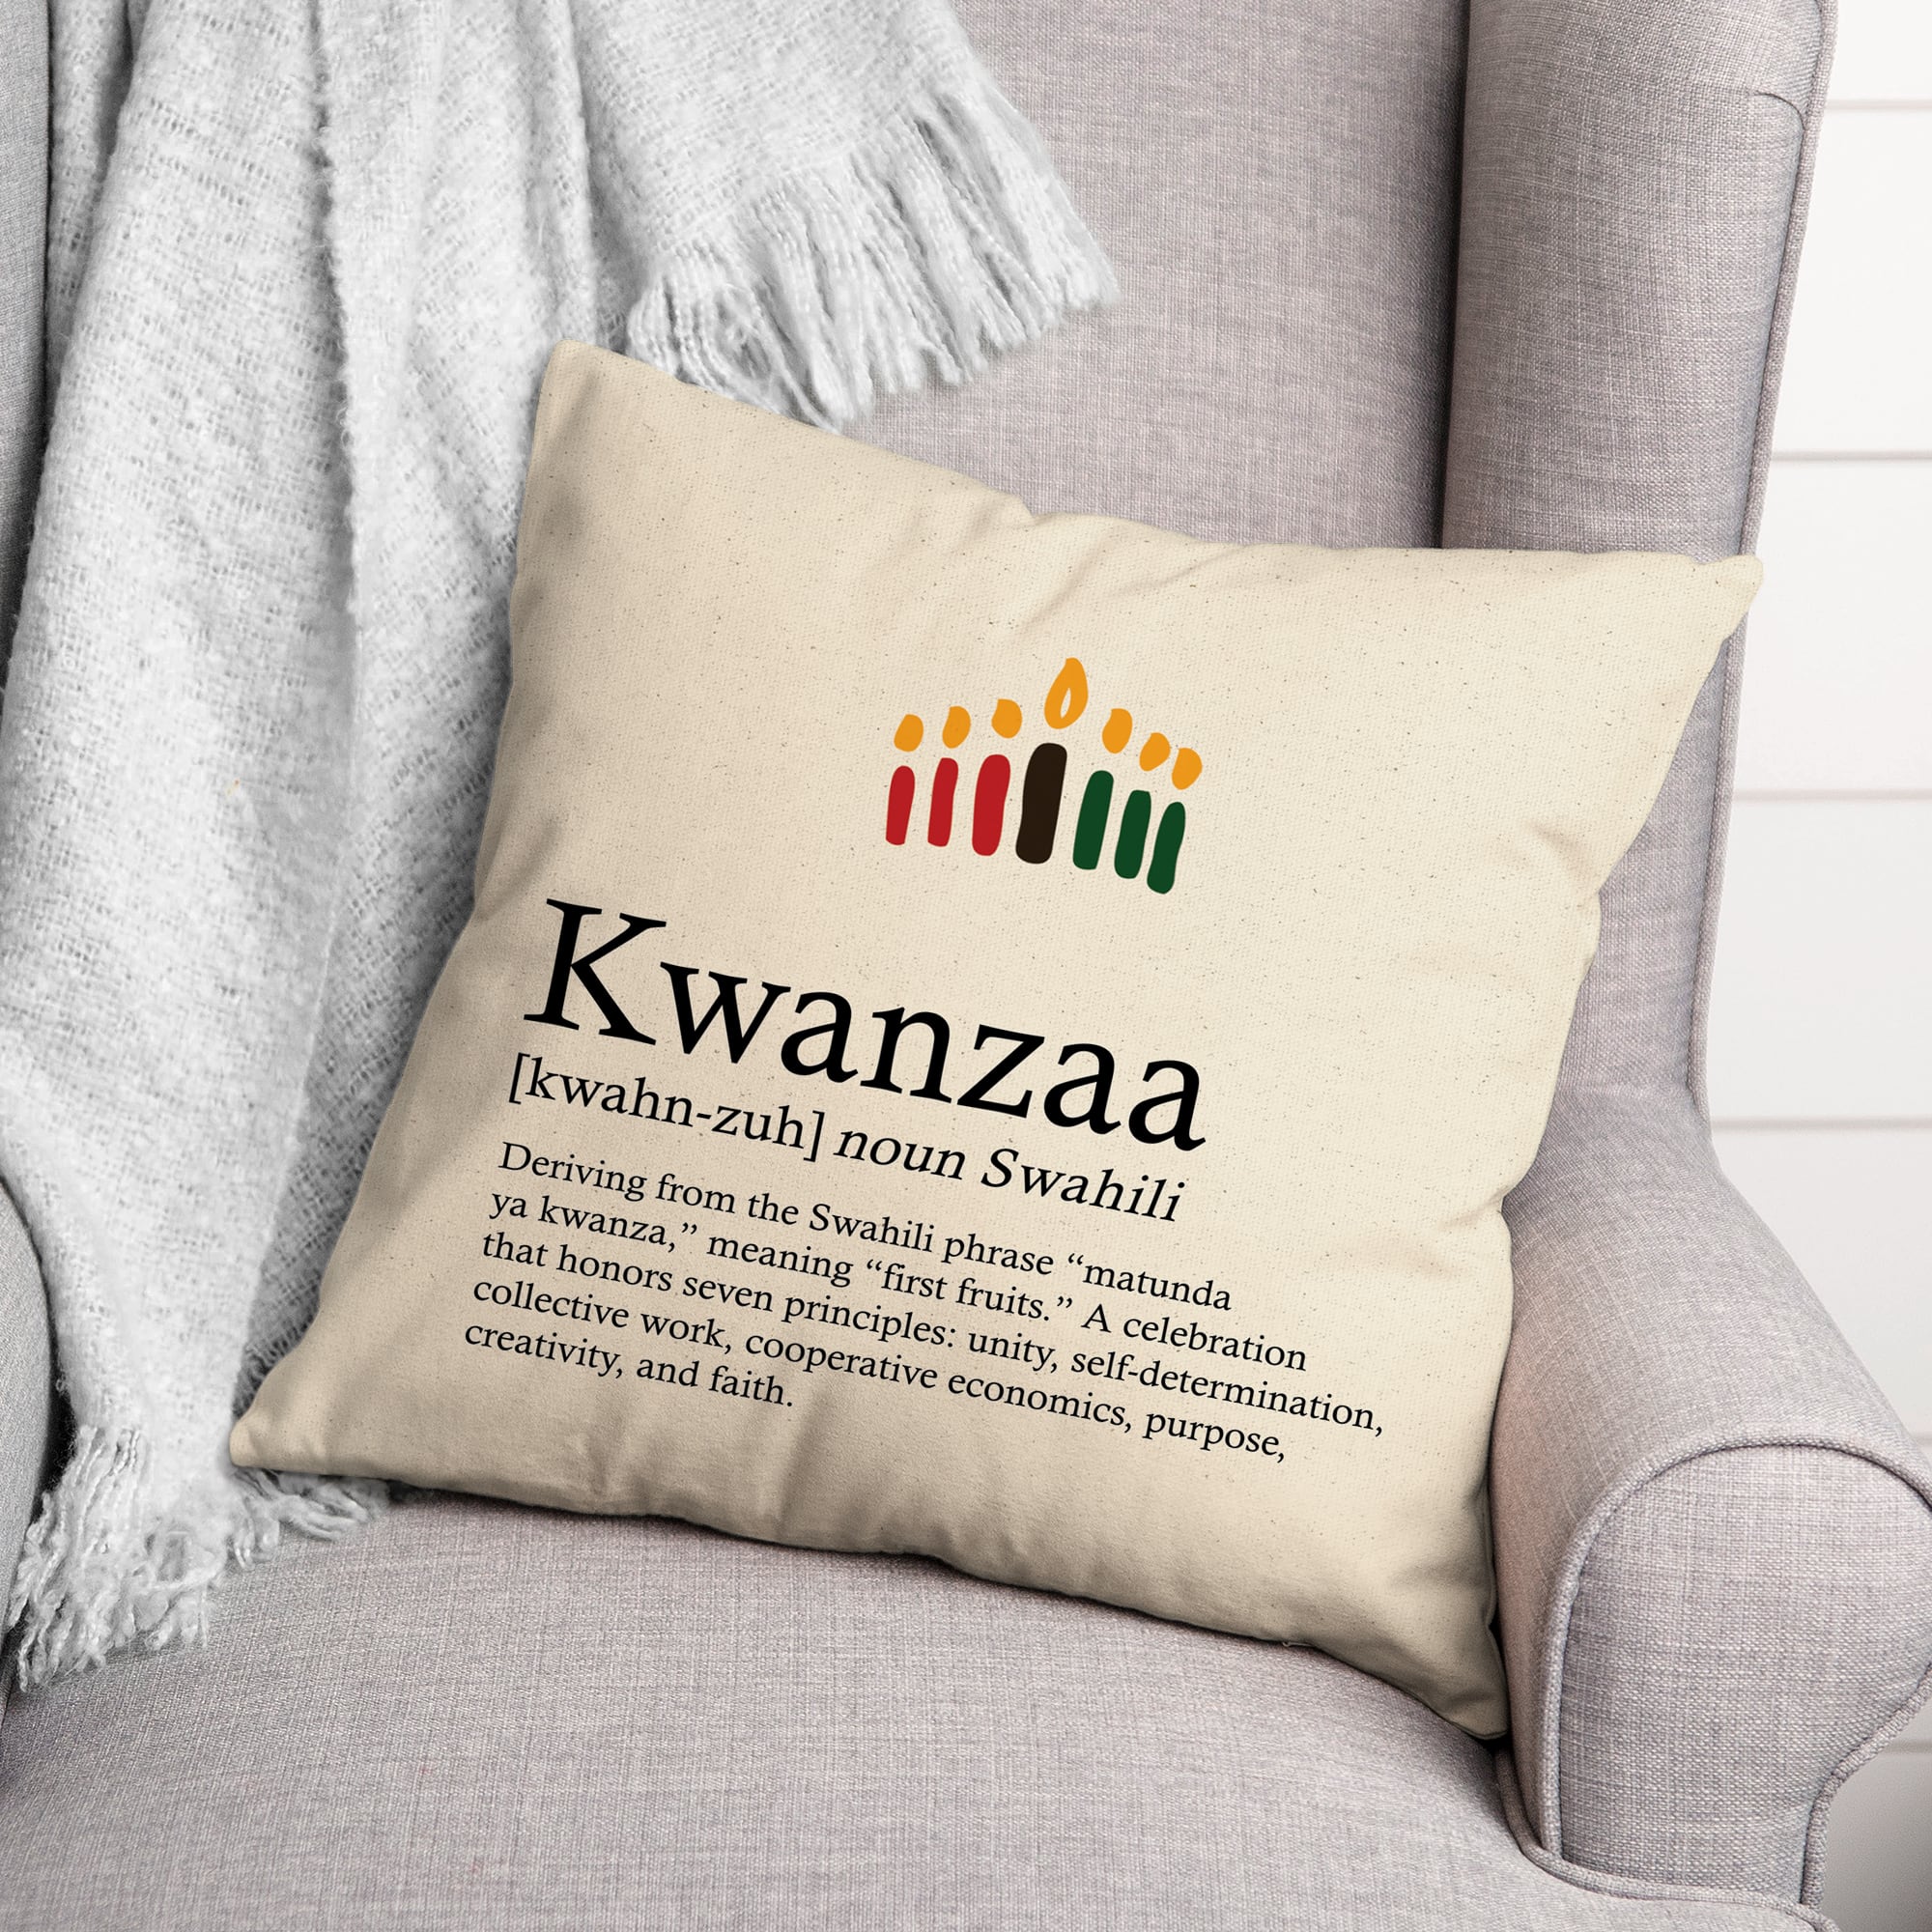 Kwanzaa Definition Throw Pillow